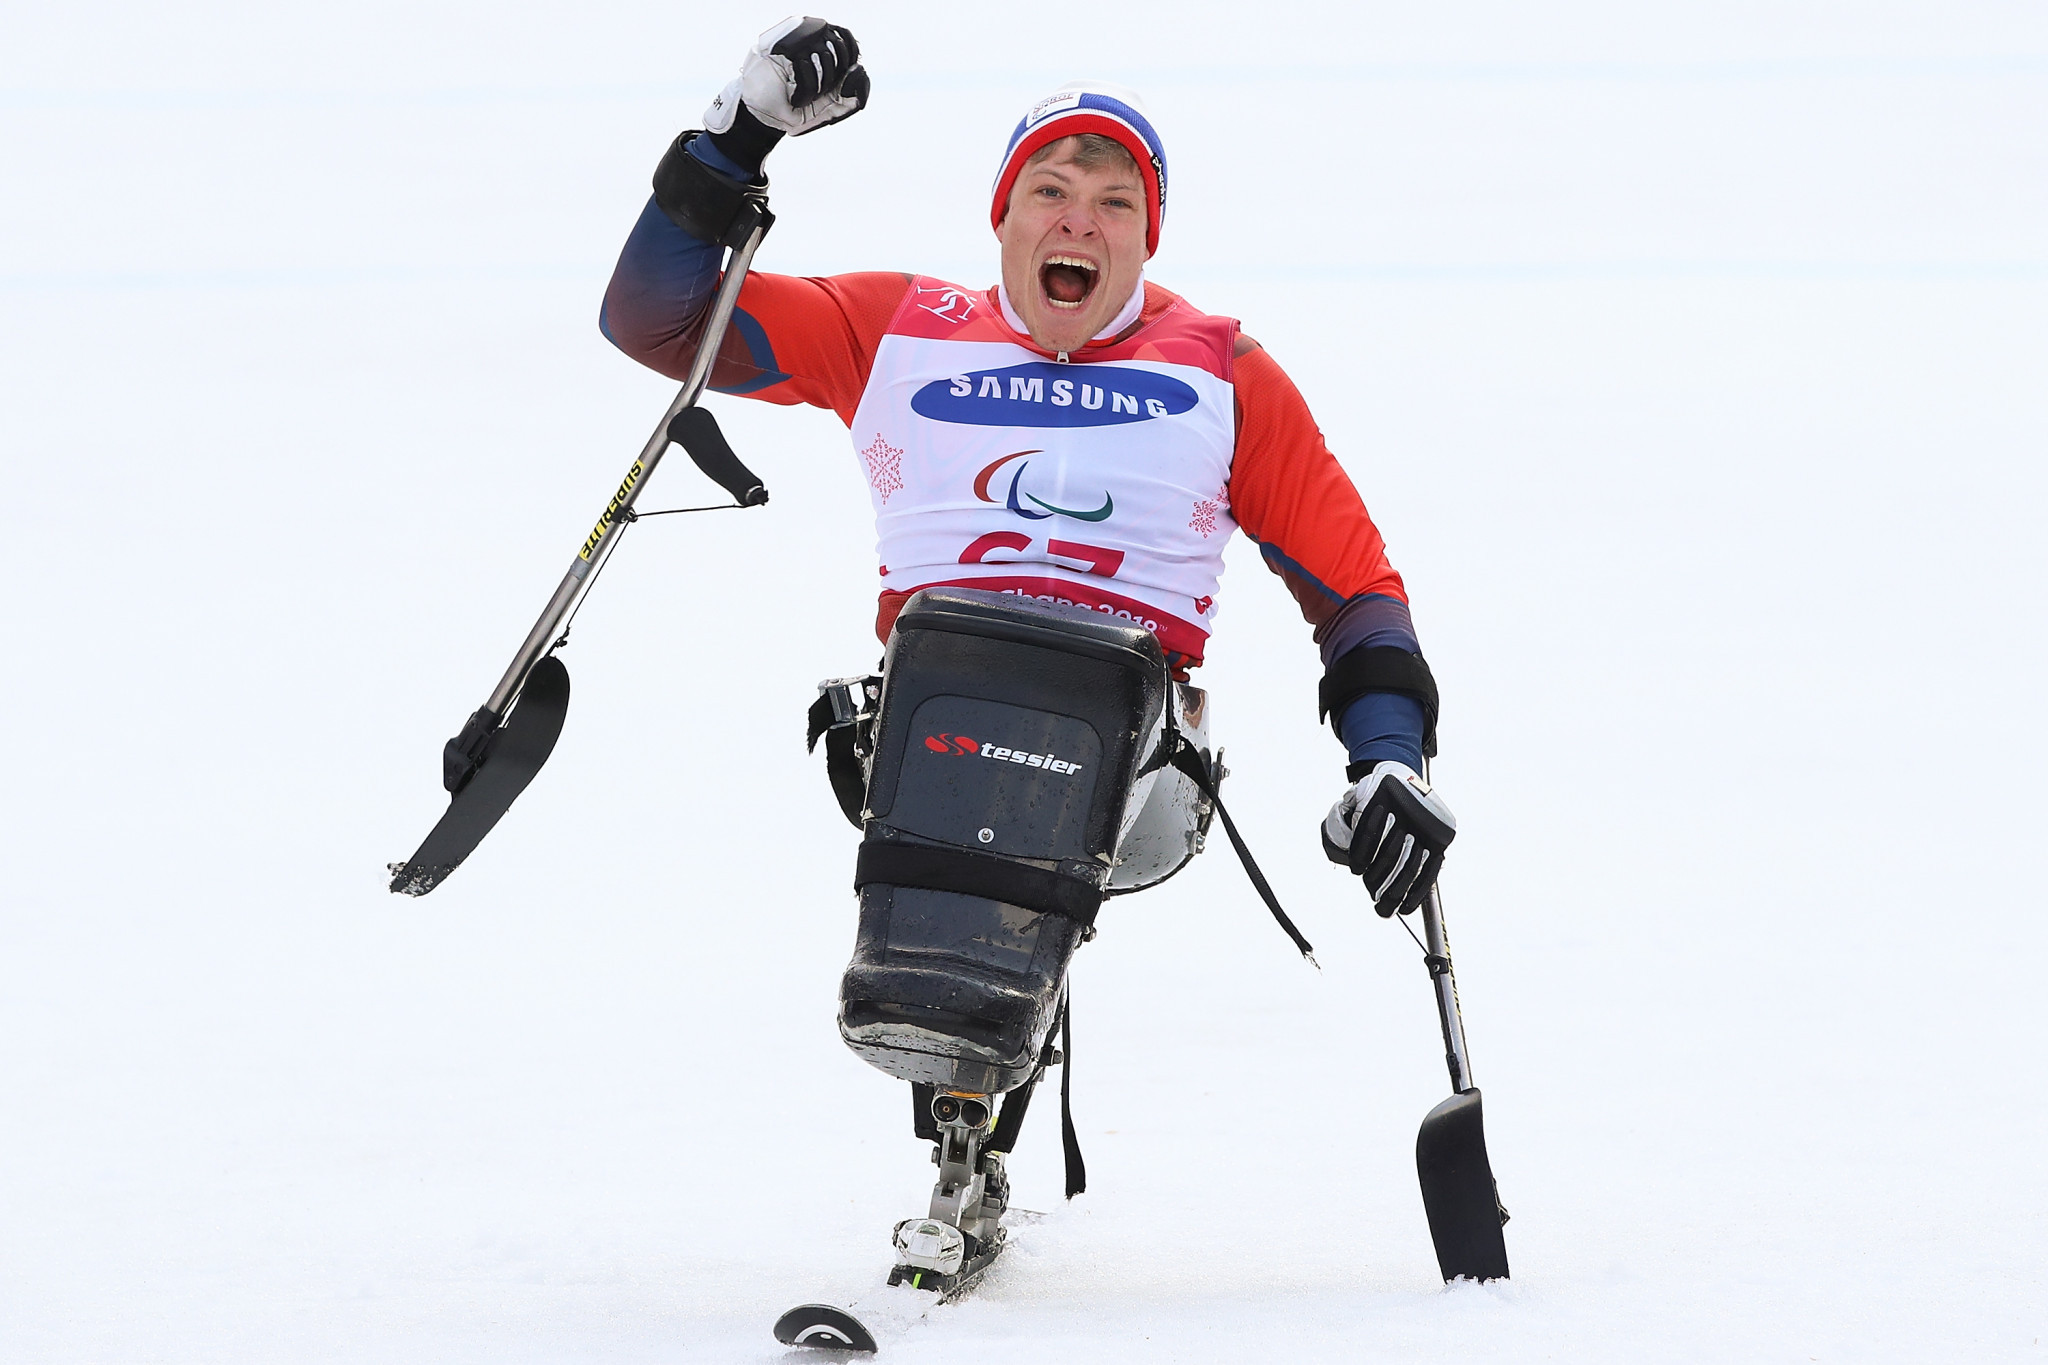 Pedersen clinches third gold of World Para Snow Sports Championships in Lillehammer